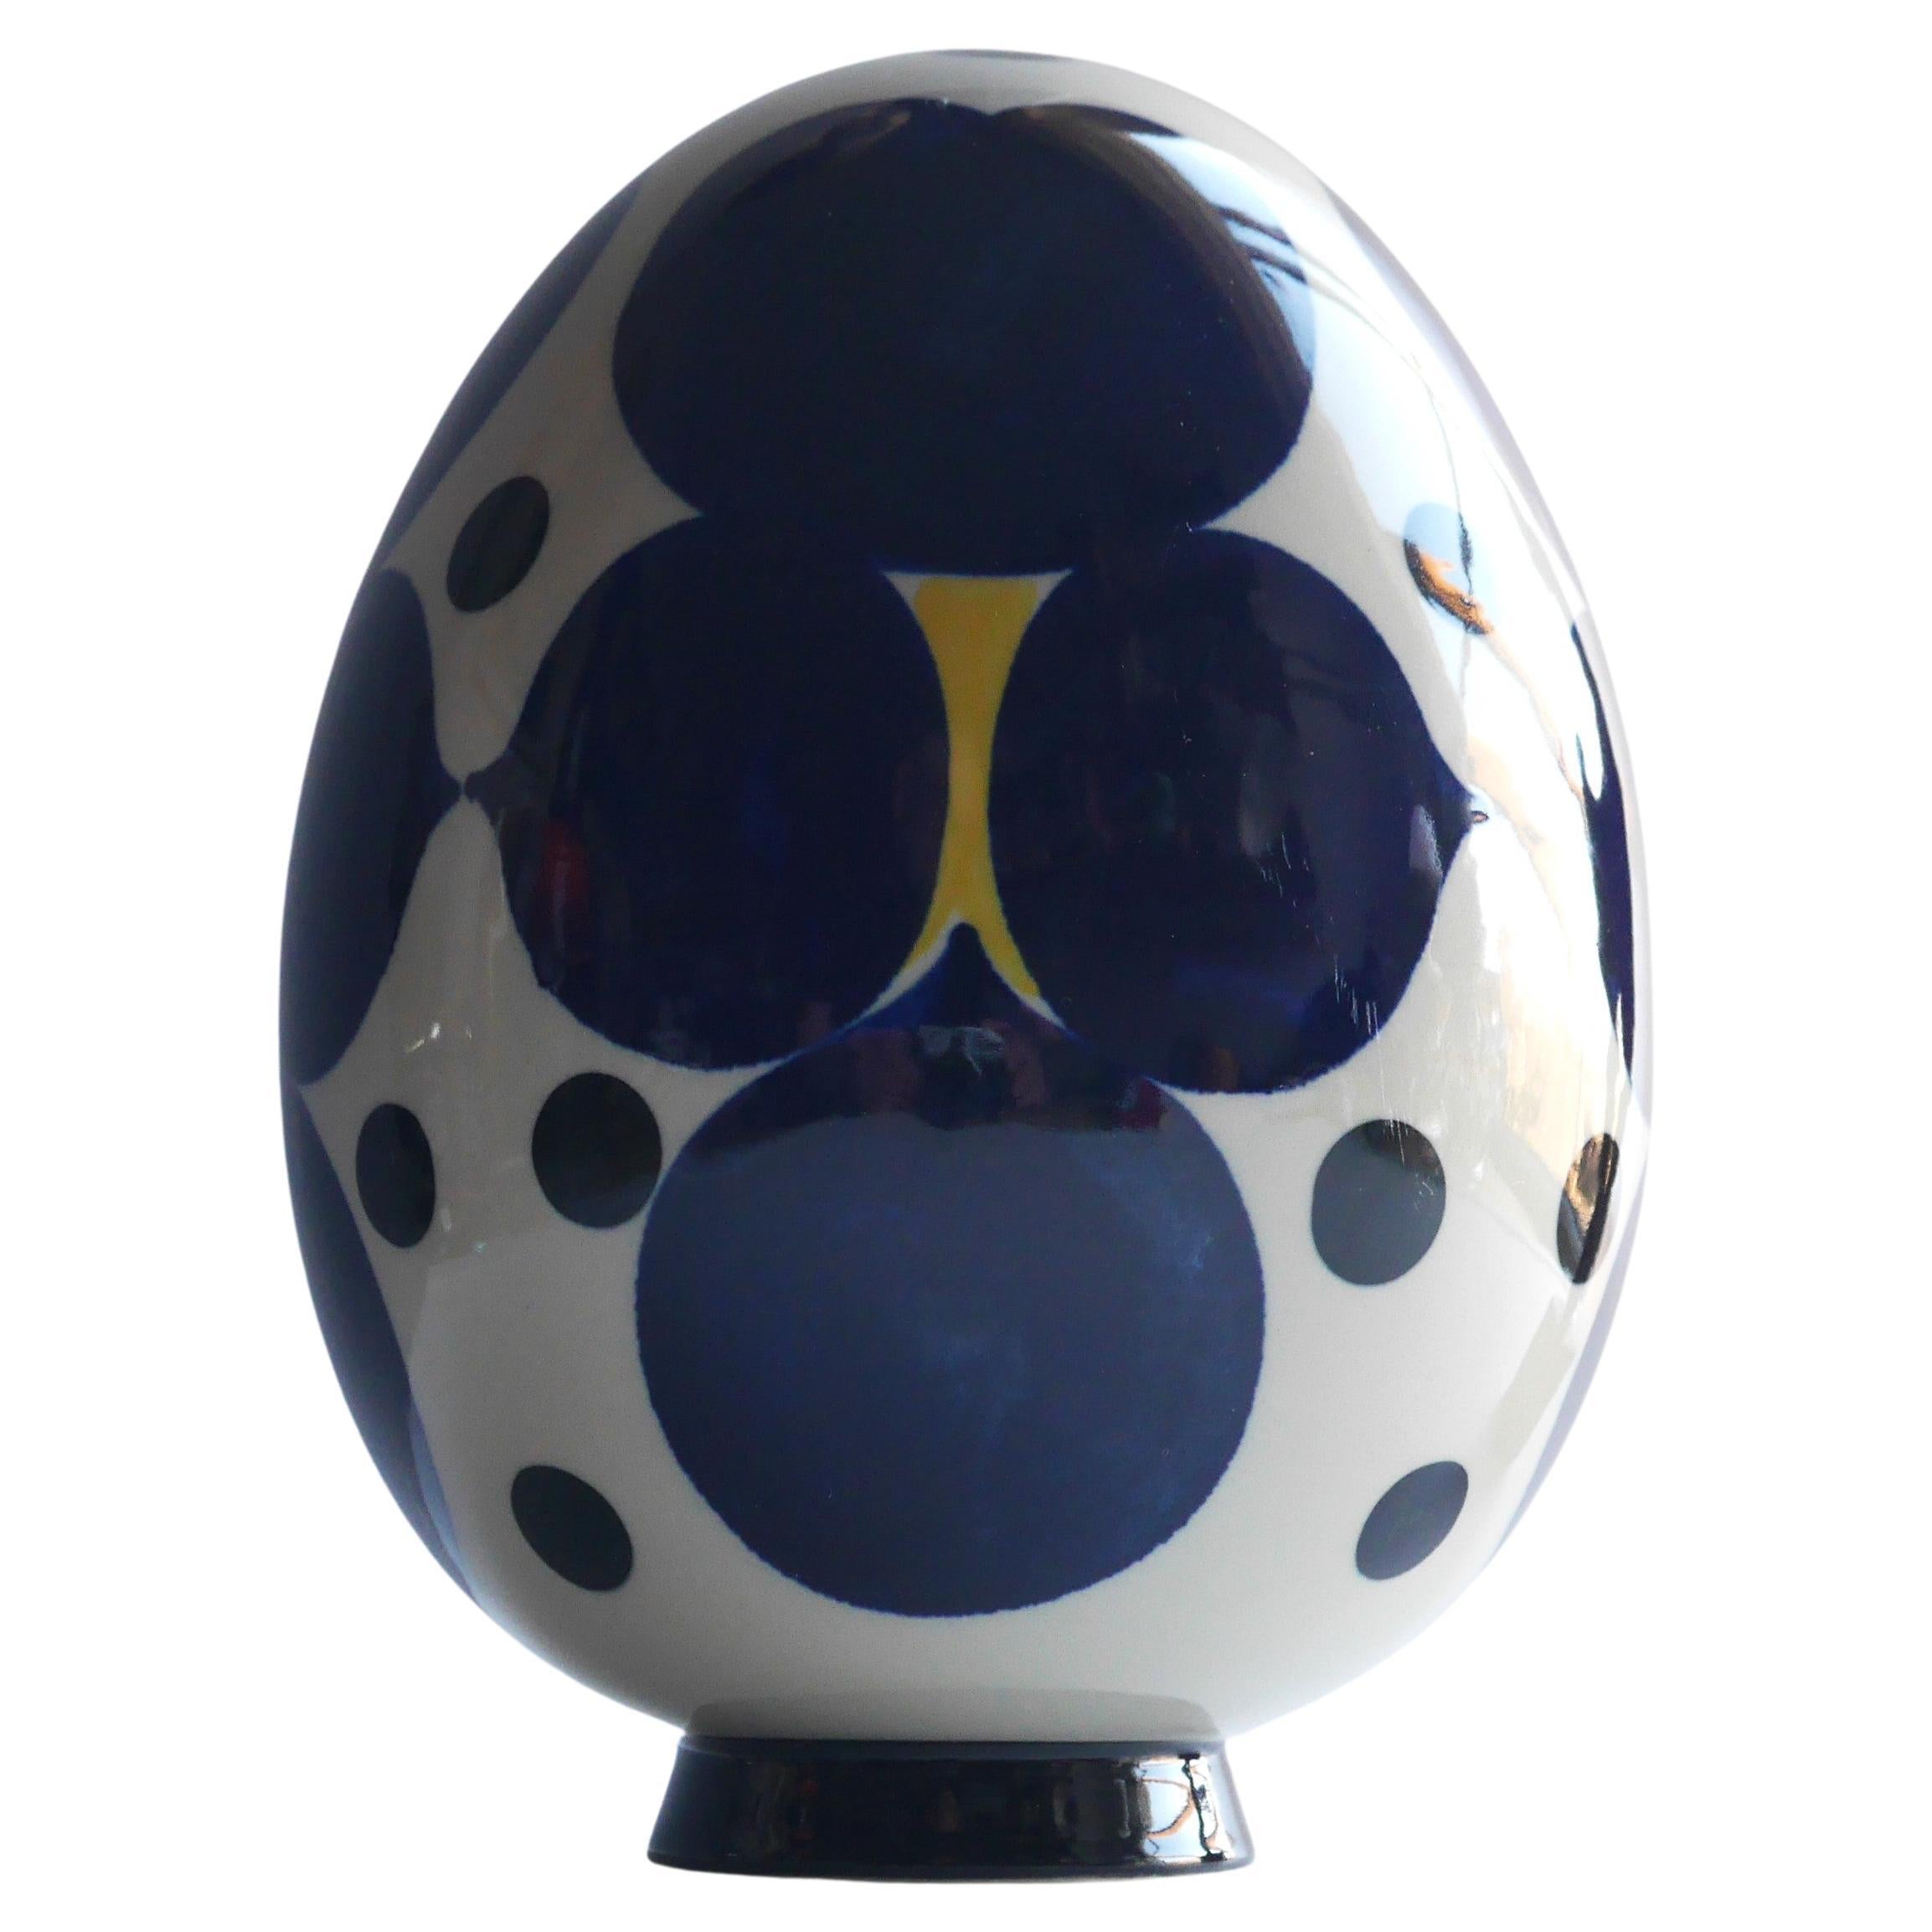 Mid-century modern porcelain egg, by Sylvia Leuchovius for Rörstrand